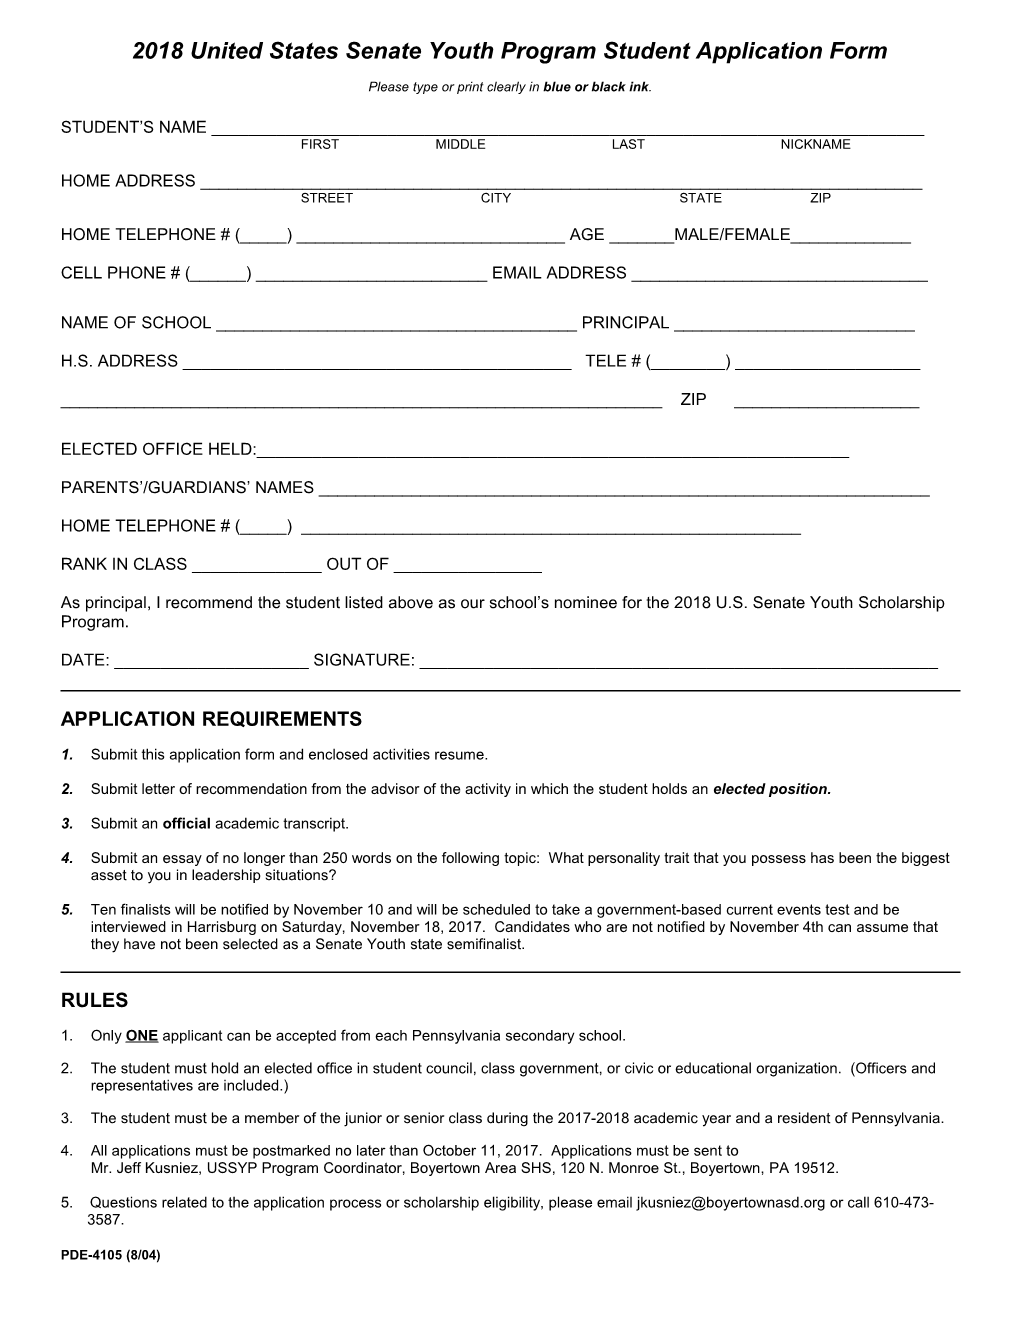 2011 United States Senate Youth Program Student Application Form s1